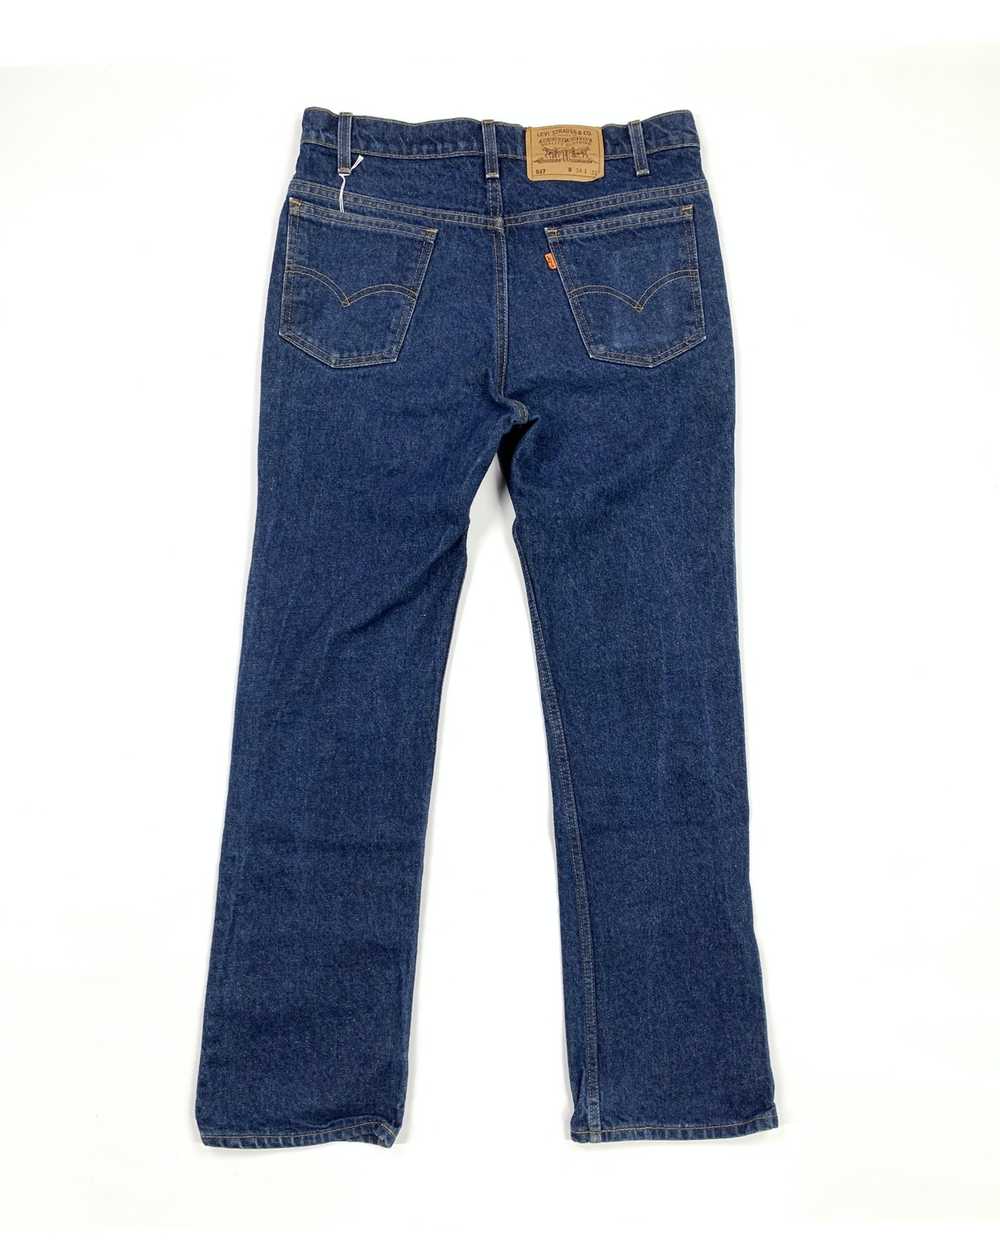 Levi's × Vintage 90s 517 Denim Jeans / Orange Tab - image 4